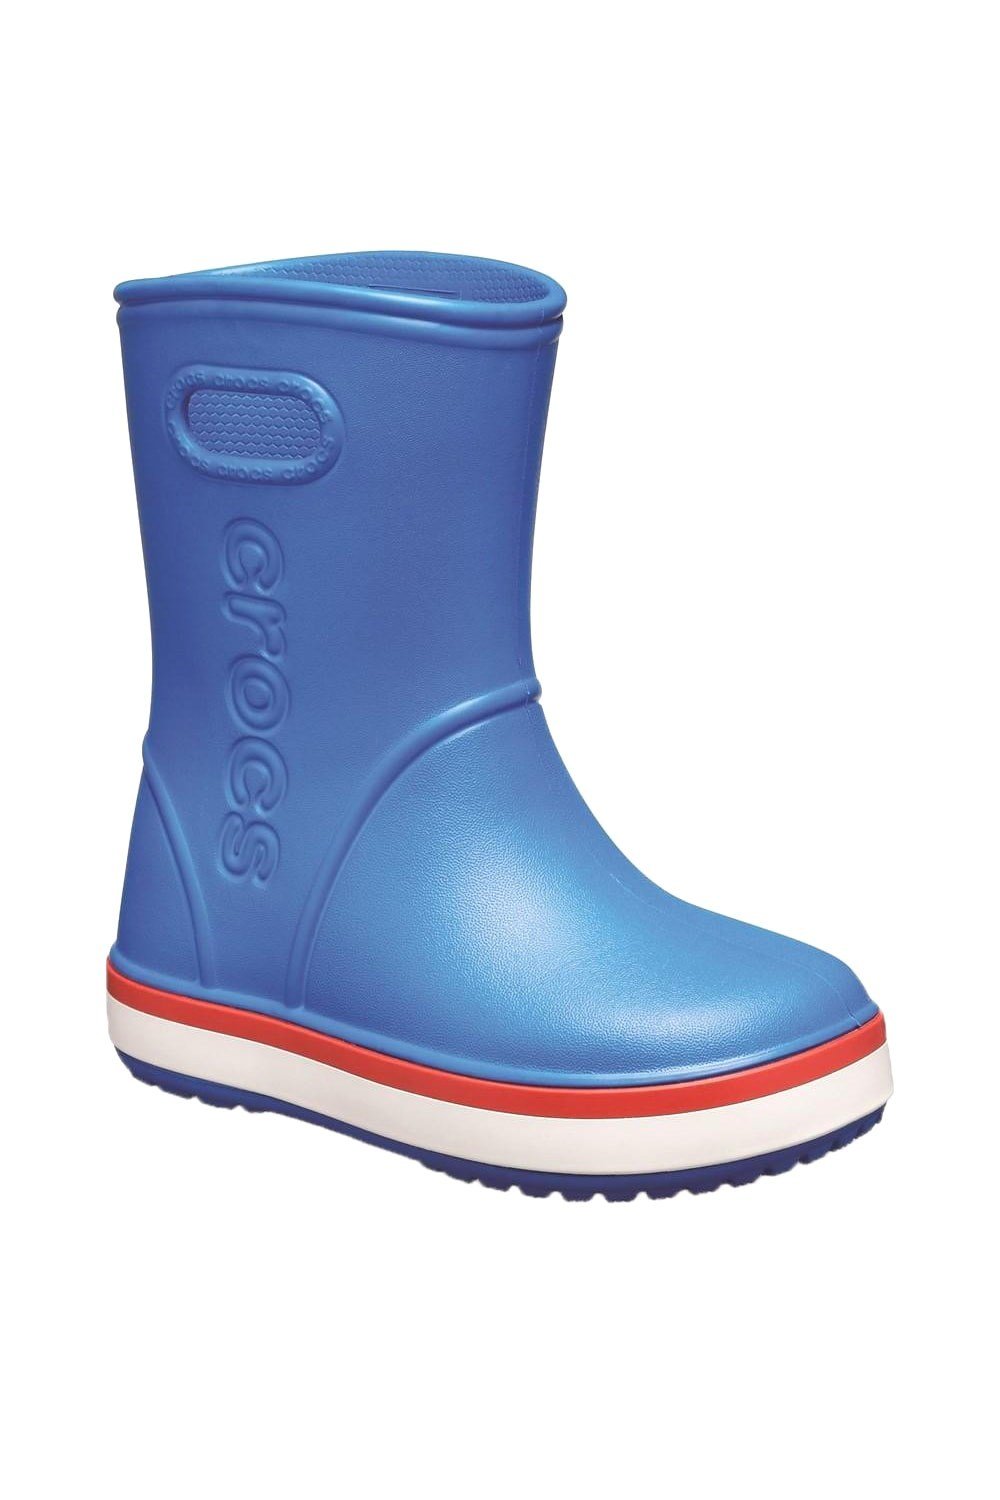 Kids Crocband Wellington Boots -